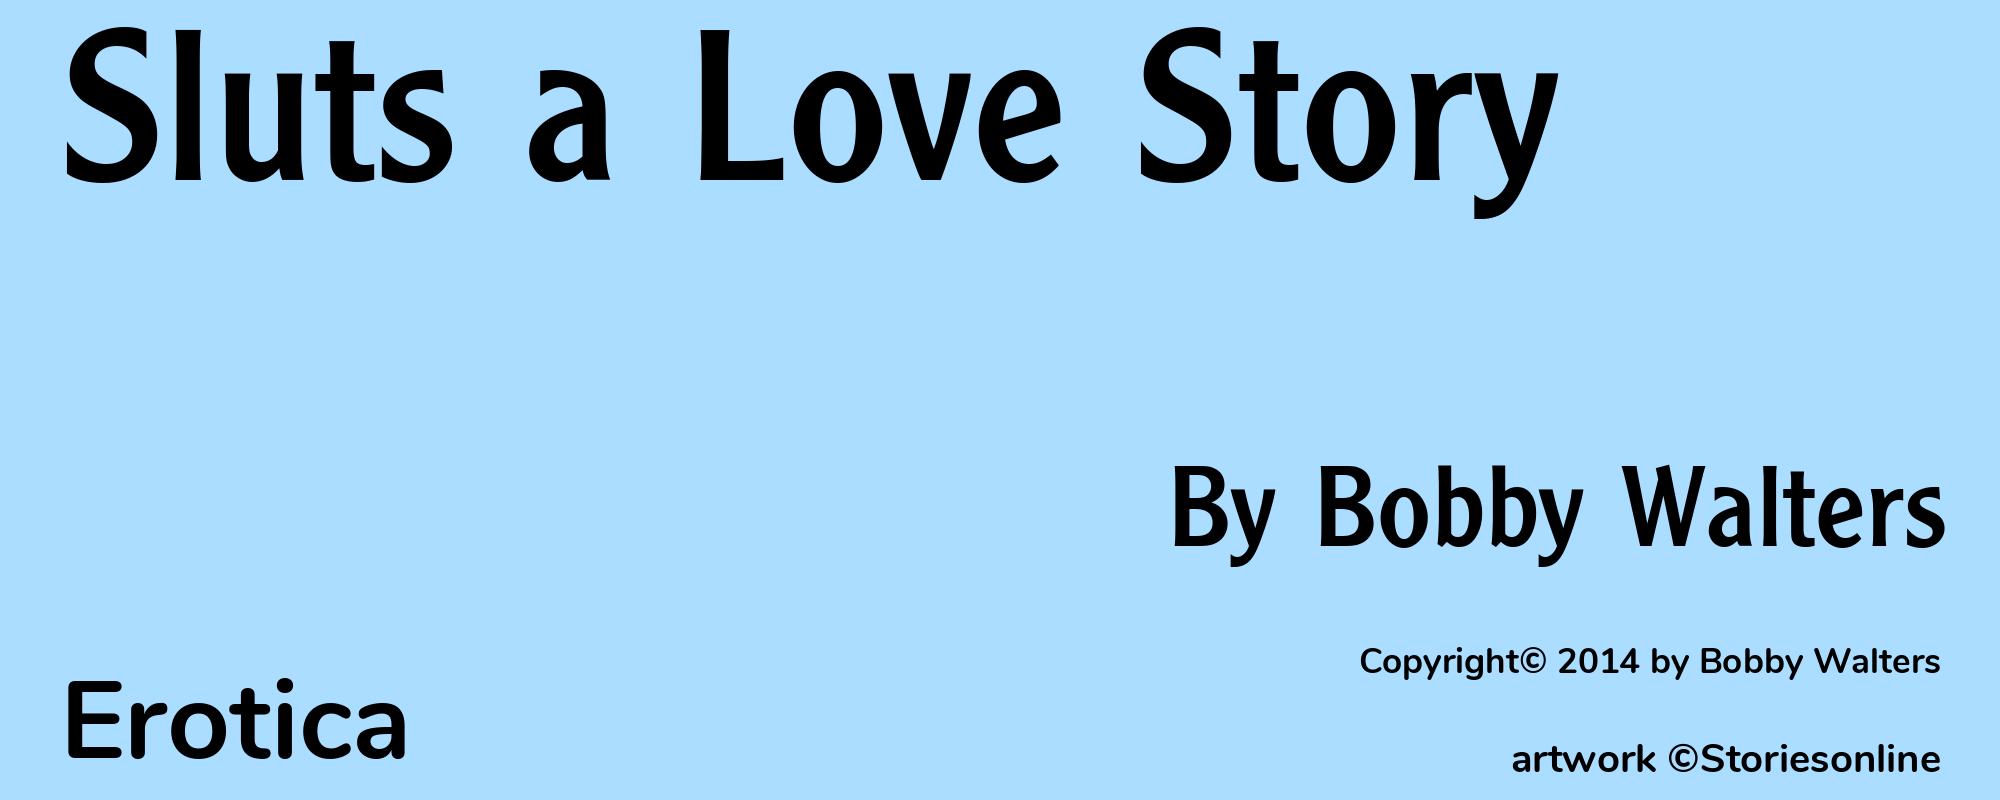 Sluts a Love Story - Cover